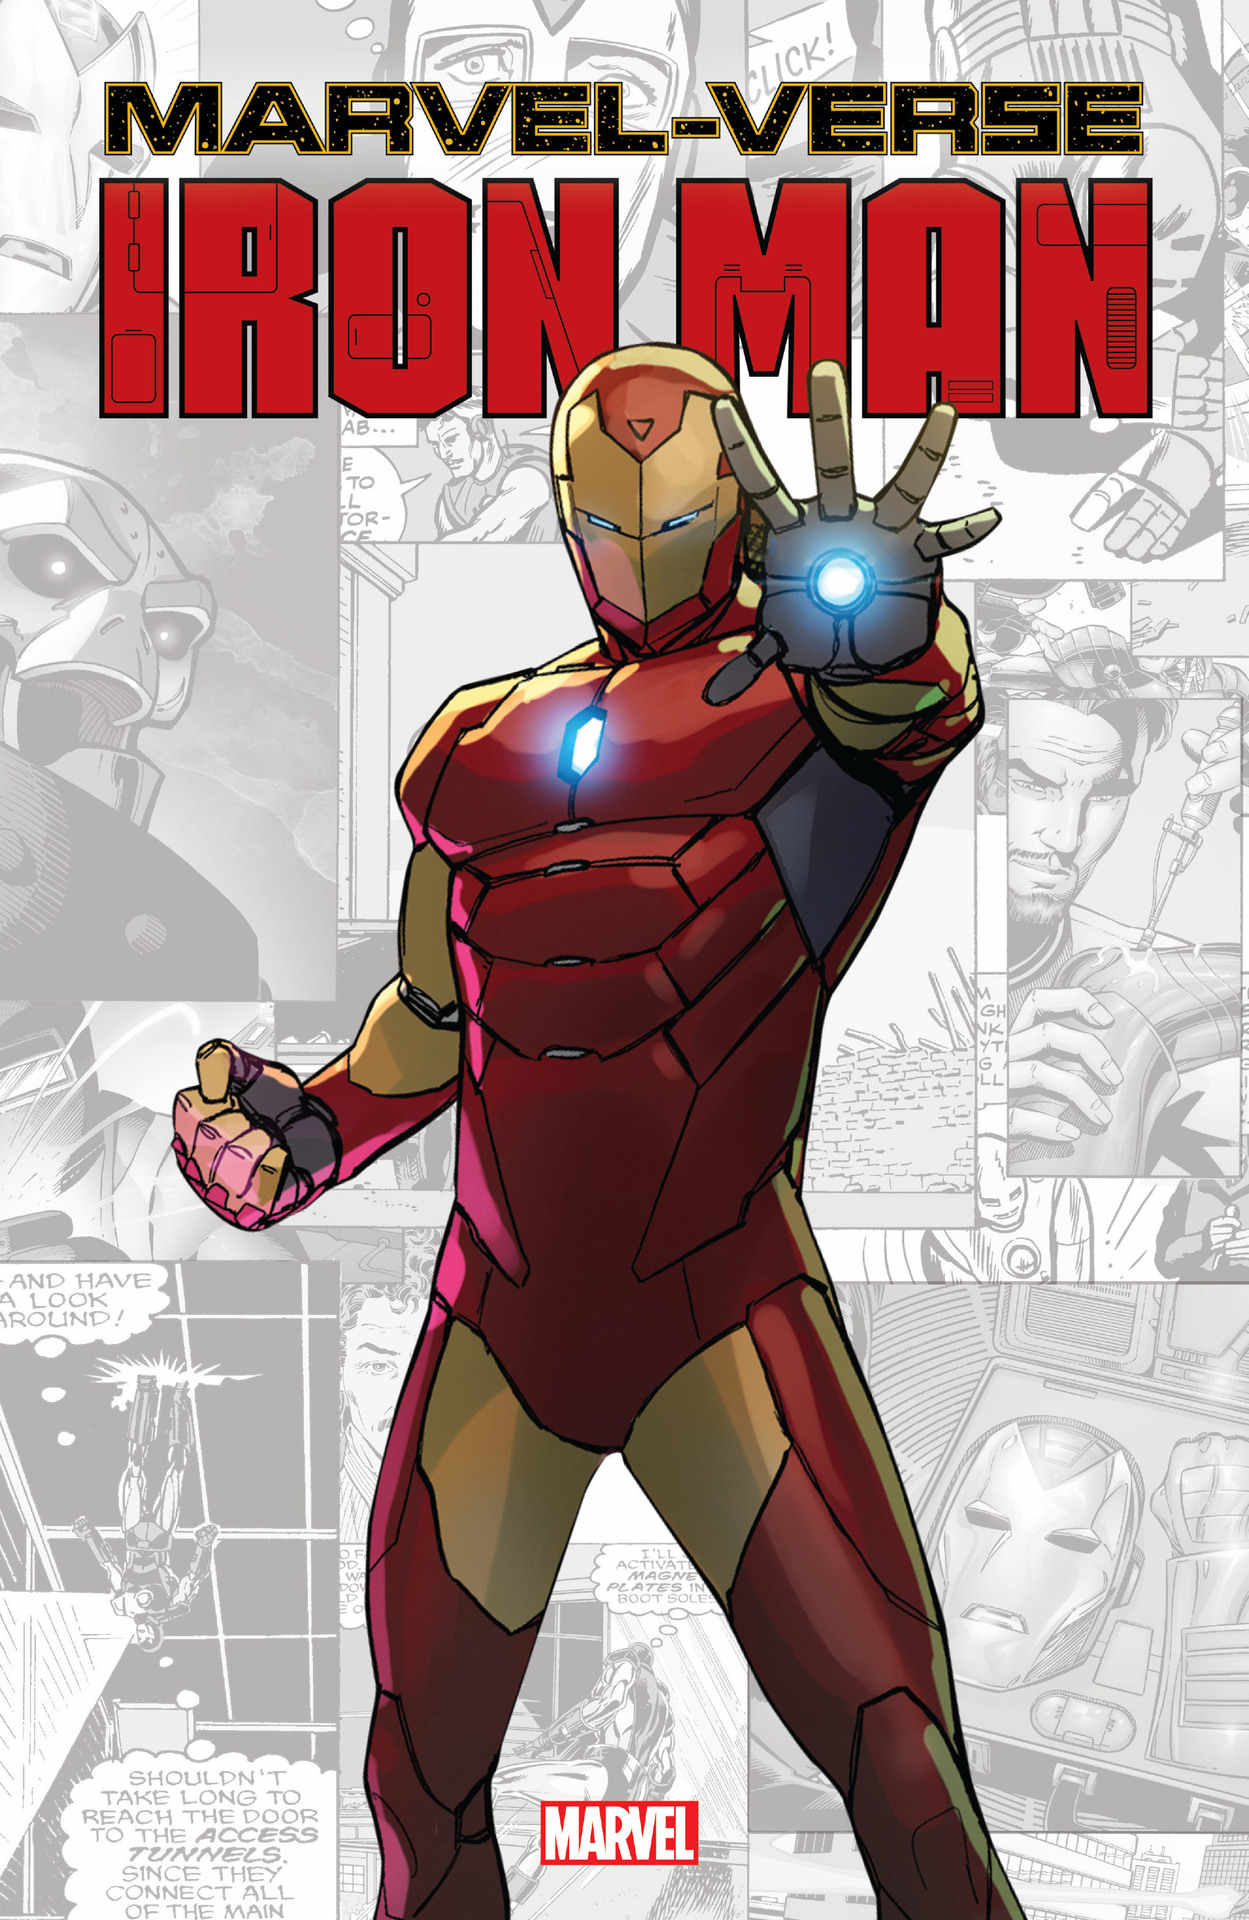 Marvel-verse: Iron Man | Marvel Comics